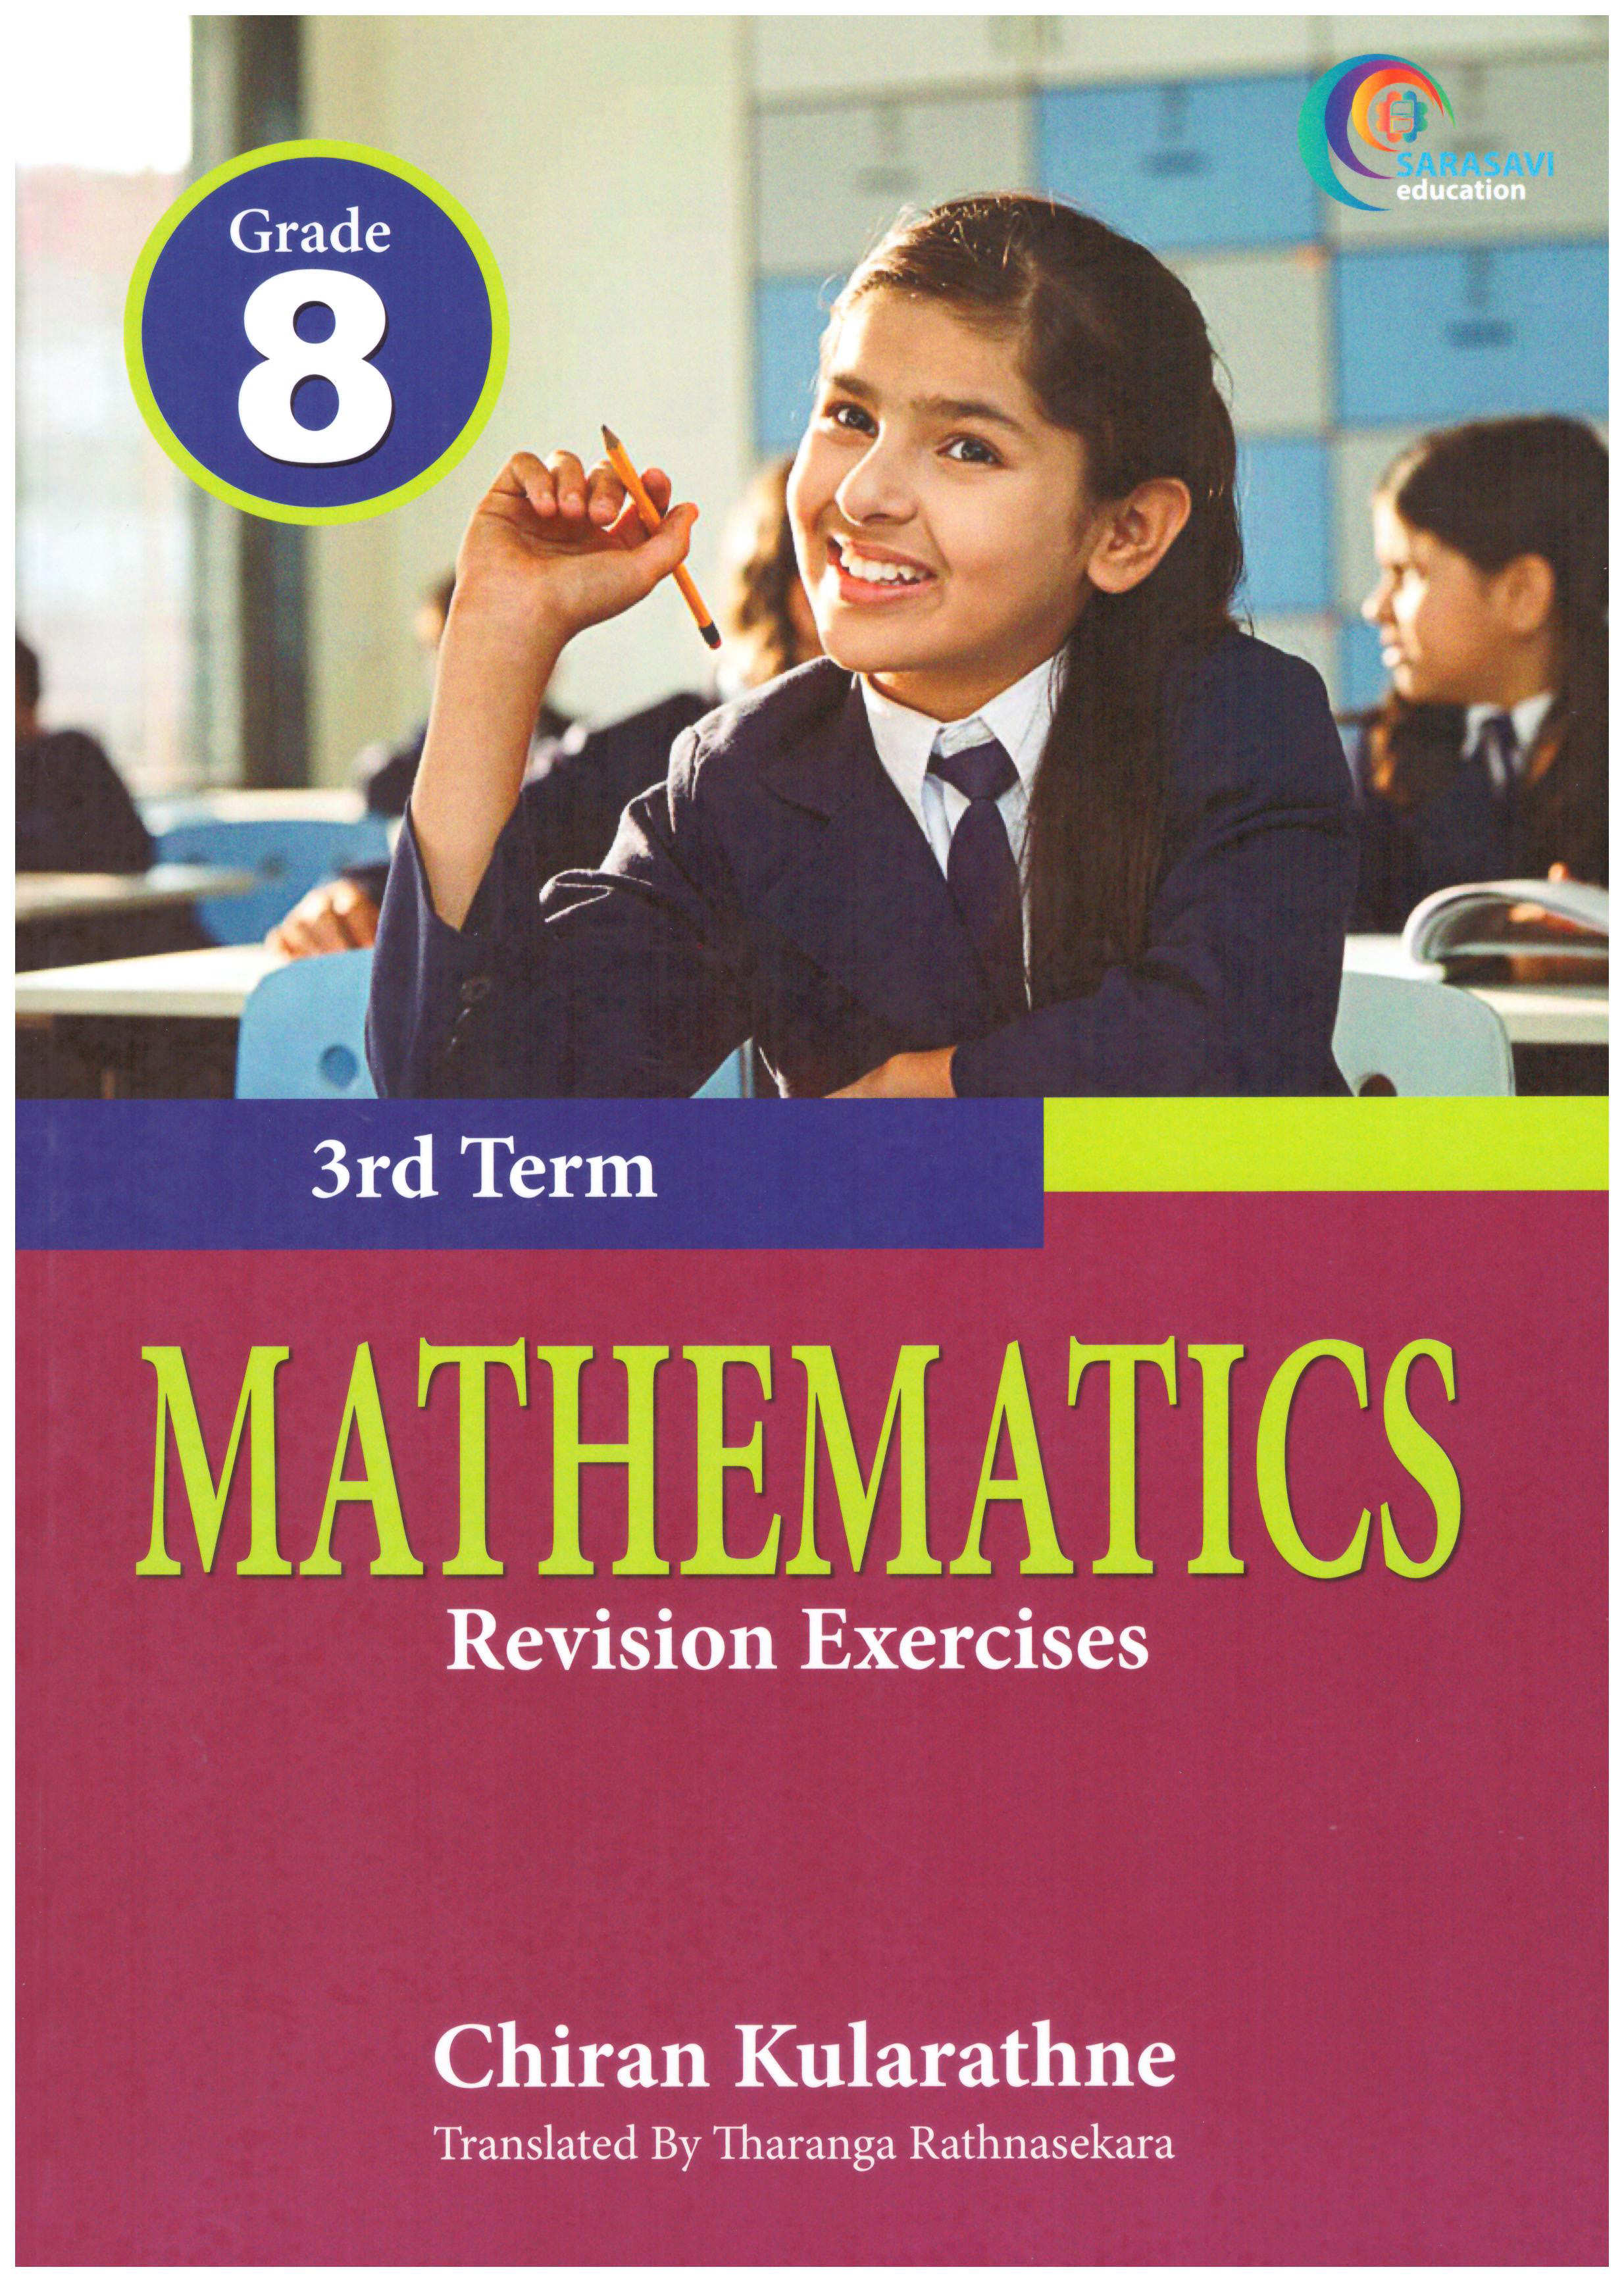 Grade 8 Mathematics Revision Exercises 3rd Term 